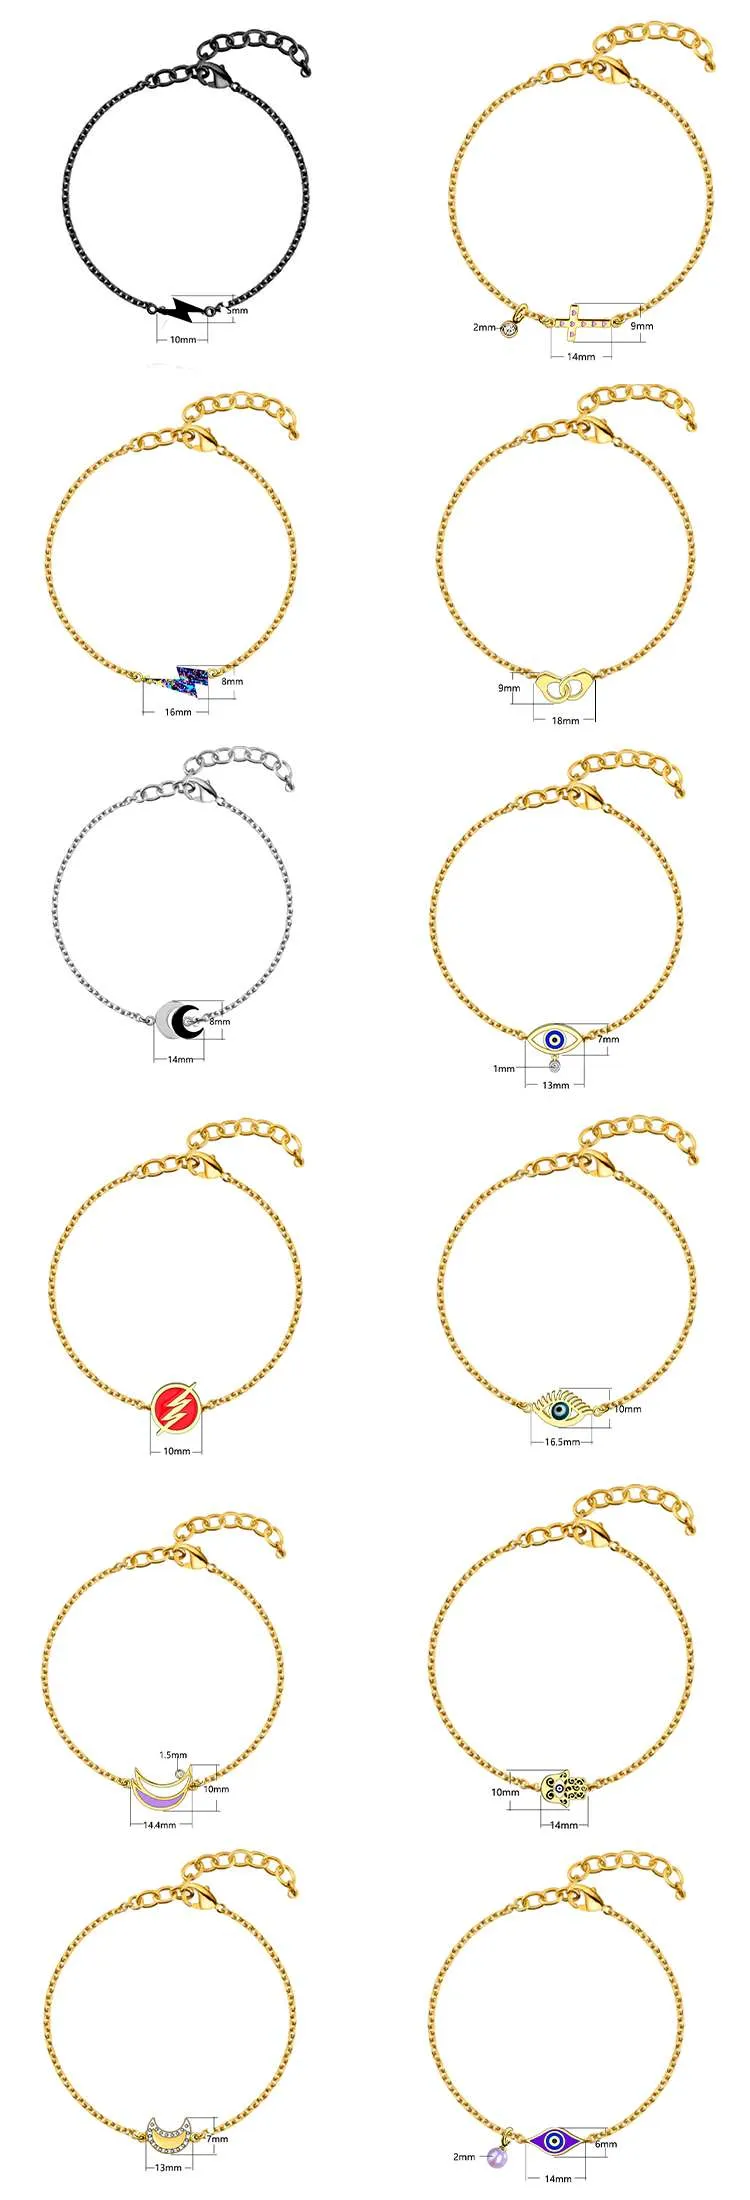 Customizable bracelets for women